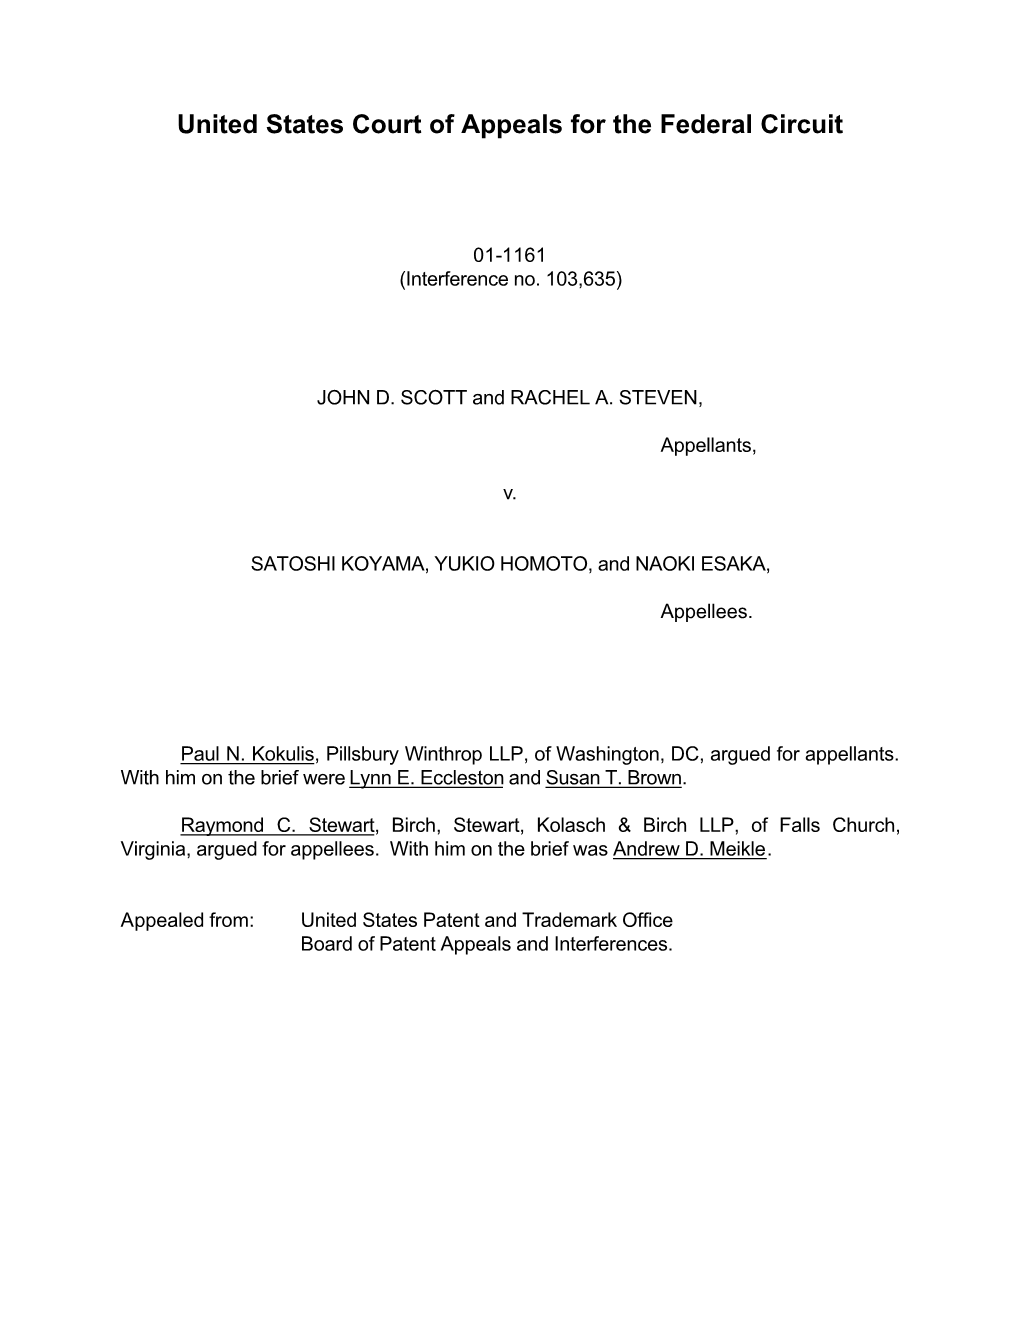 Federal Circuit Court Decisions / John D. Scott V. Satoshi Koyama